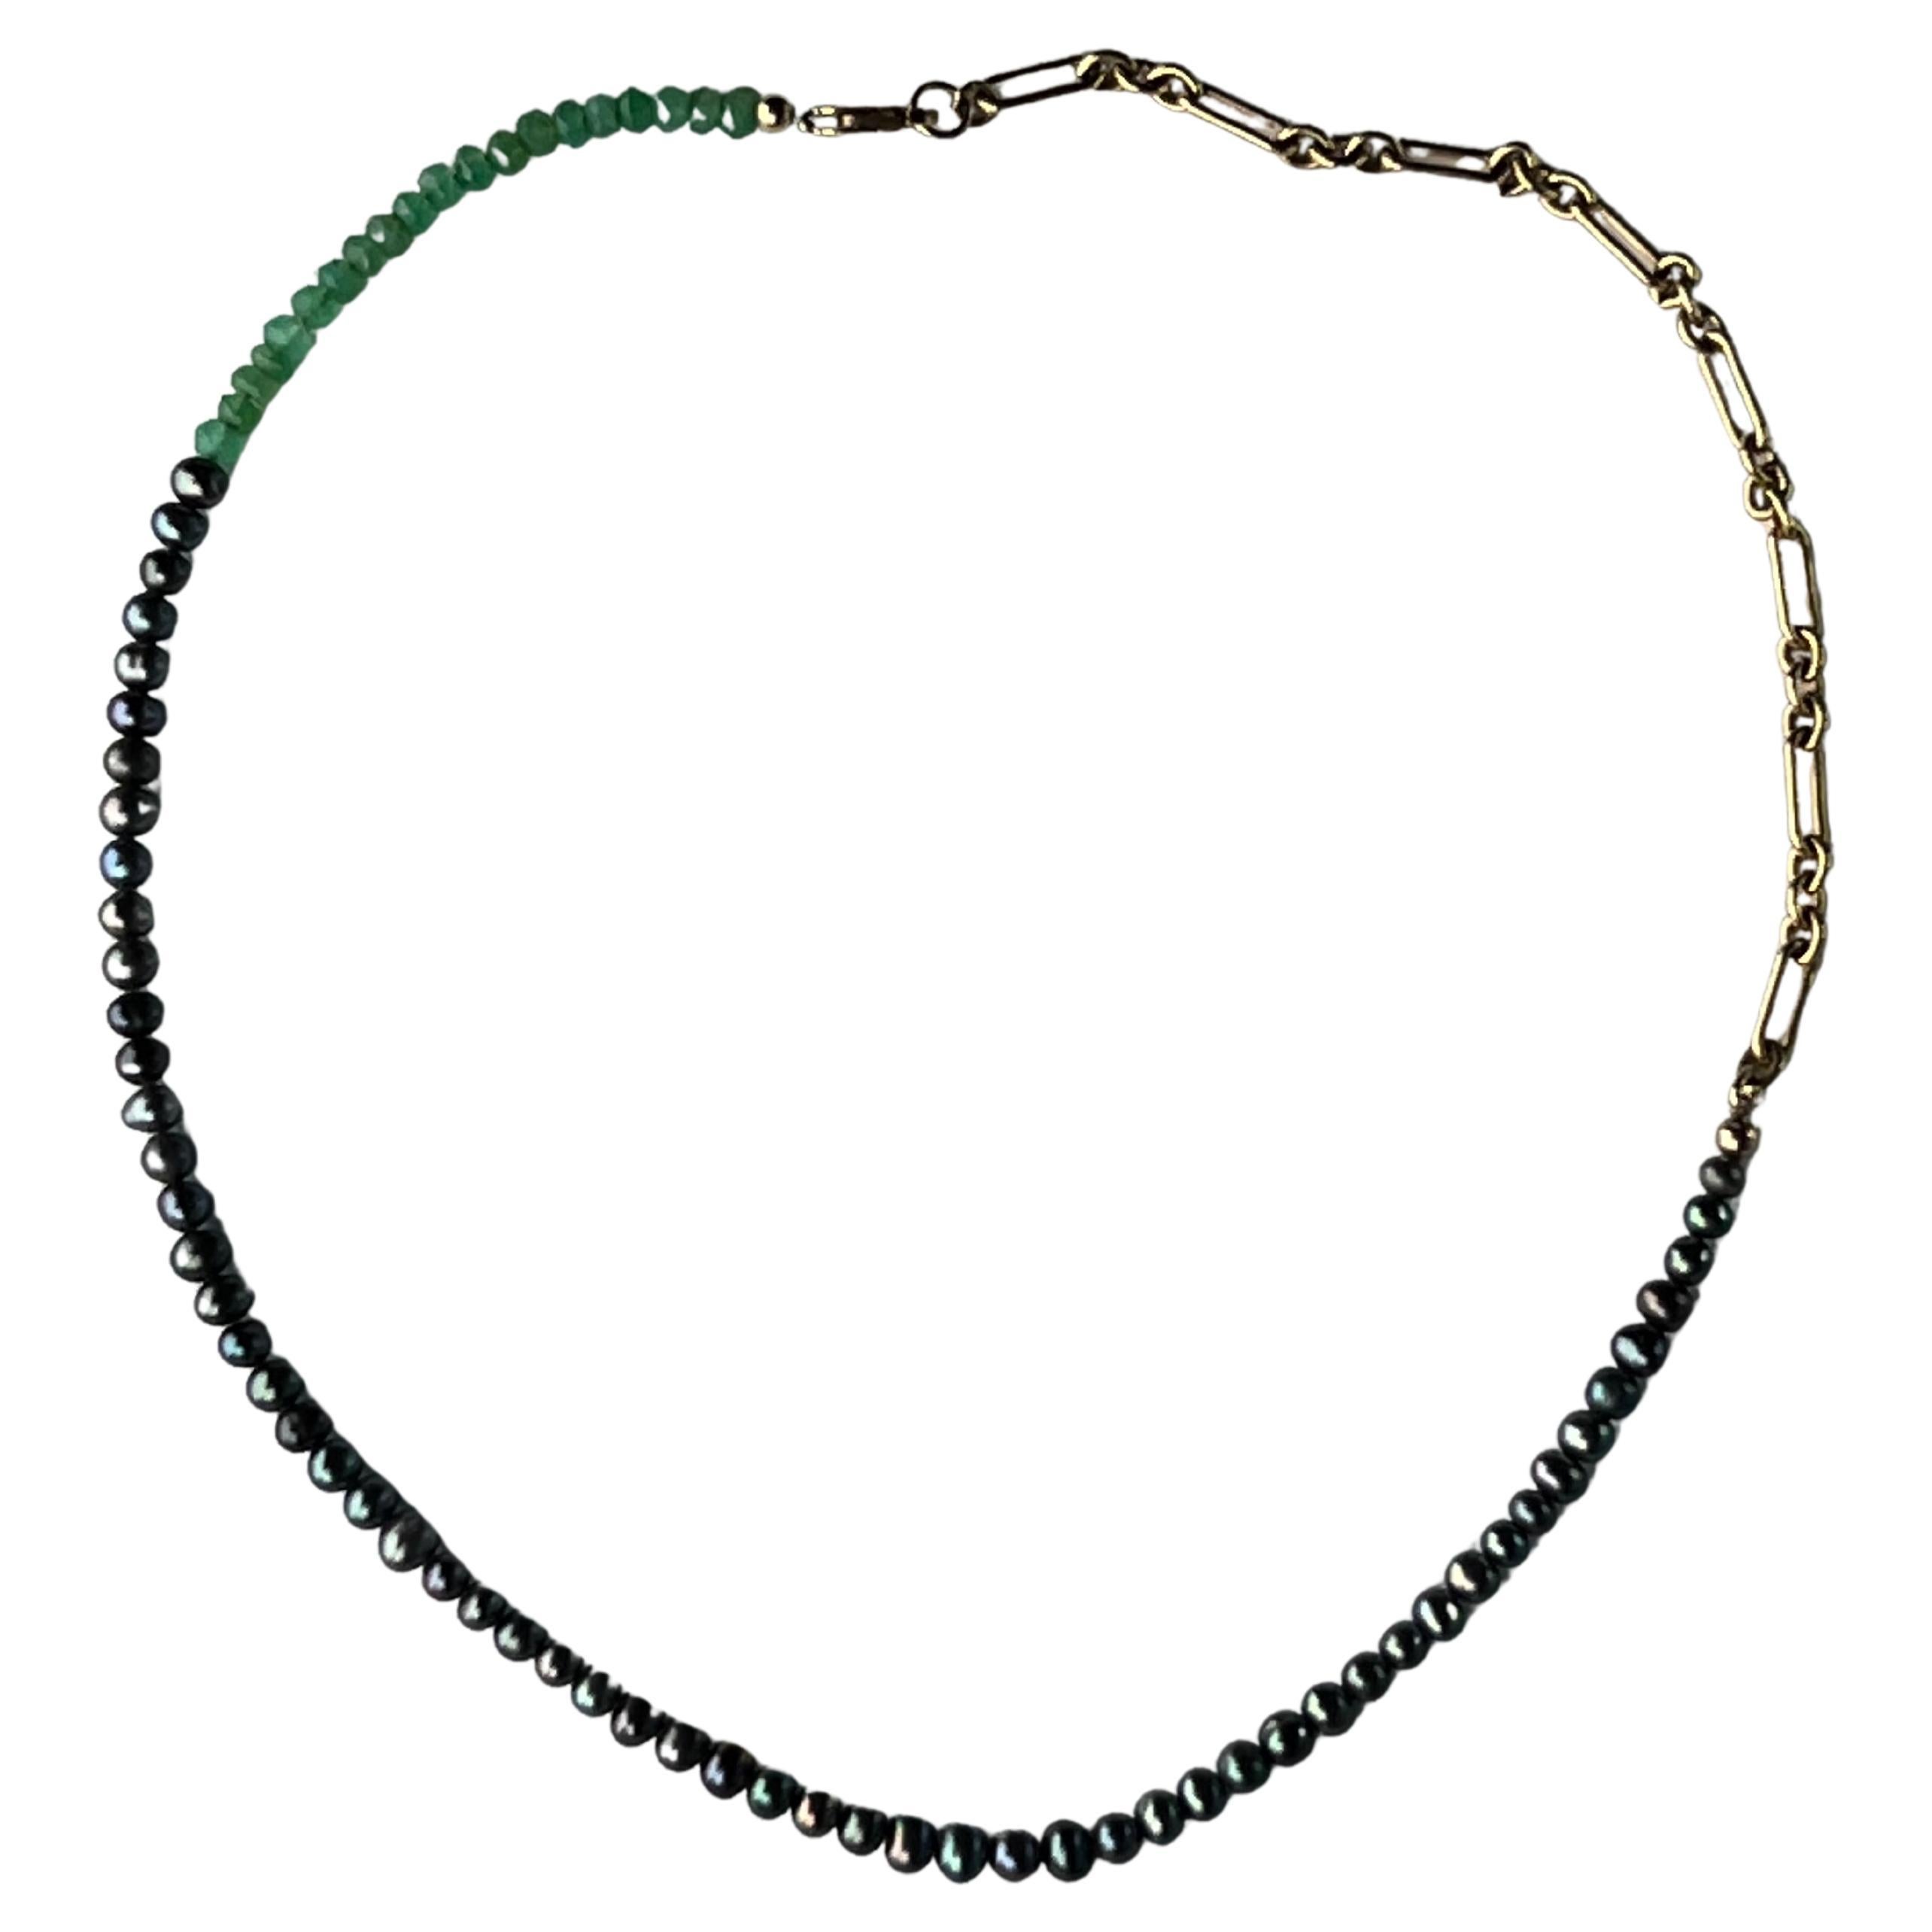 Schwarze Perle Chrysopras Gold gefüllt Kette Choker Halskette 16